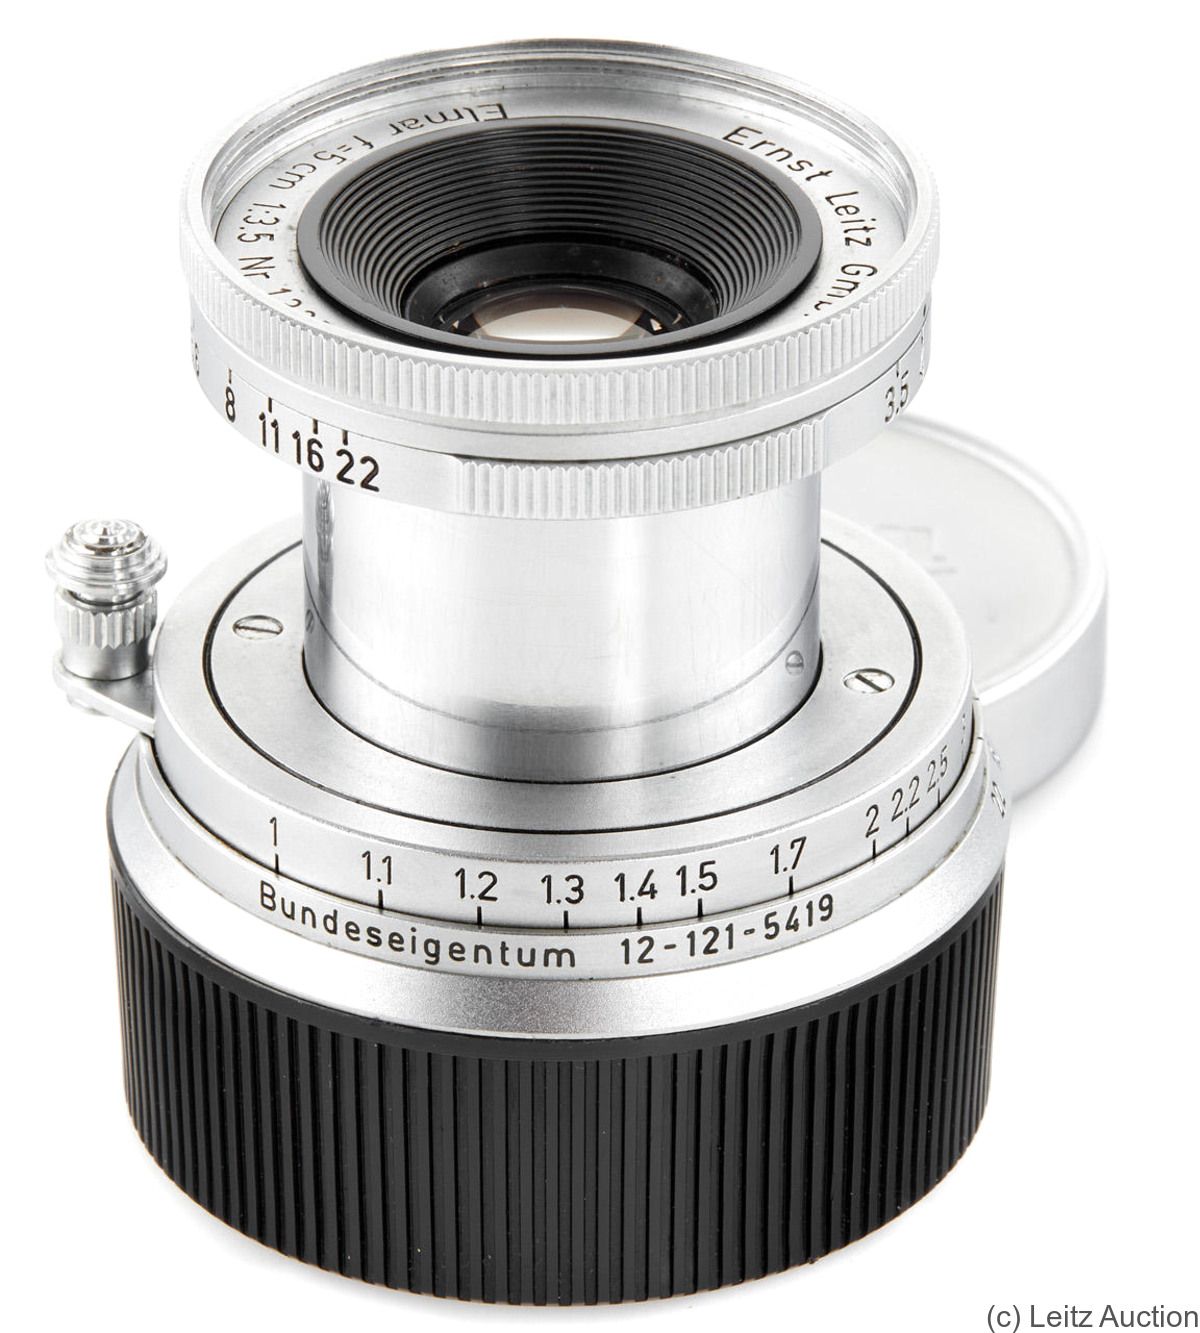 Leitz: 50mm (5cm) f3.5 Elmar 'Bundeseigentum' (BM, chrome) camera